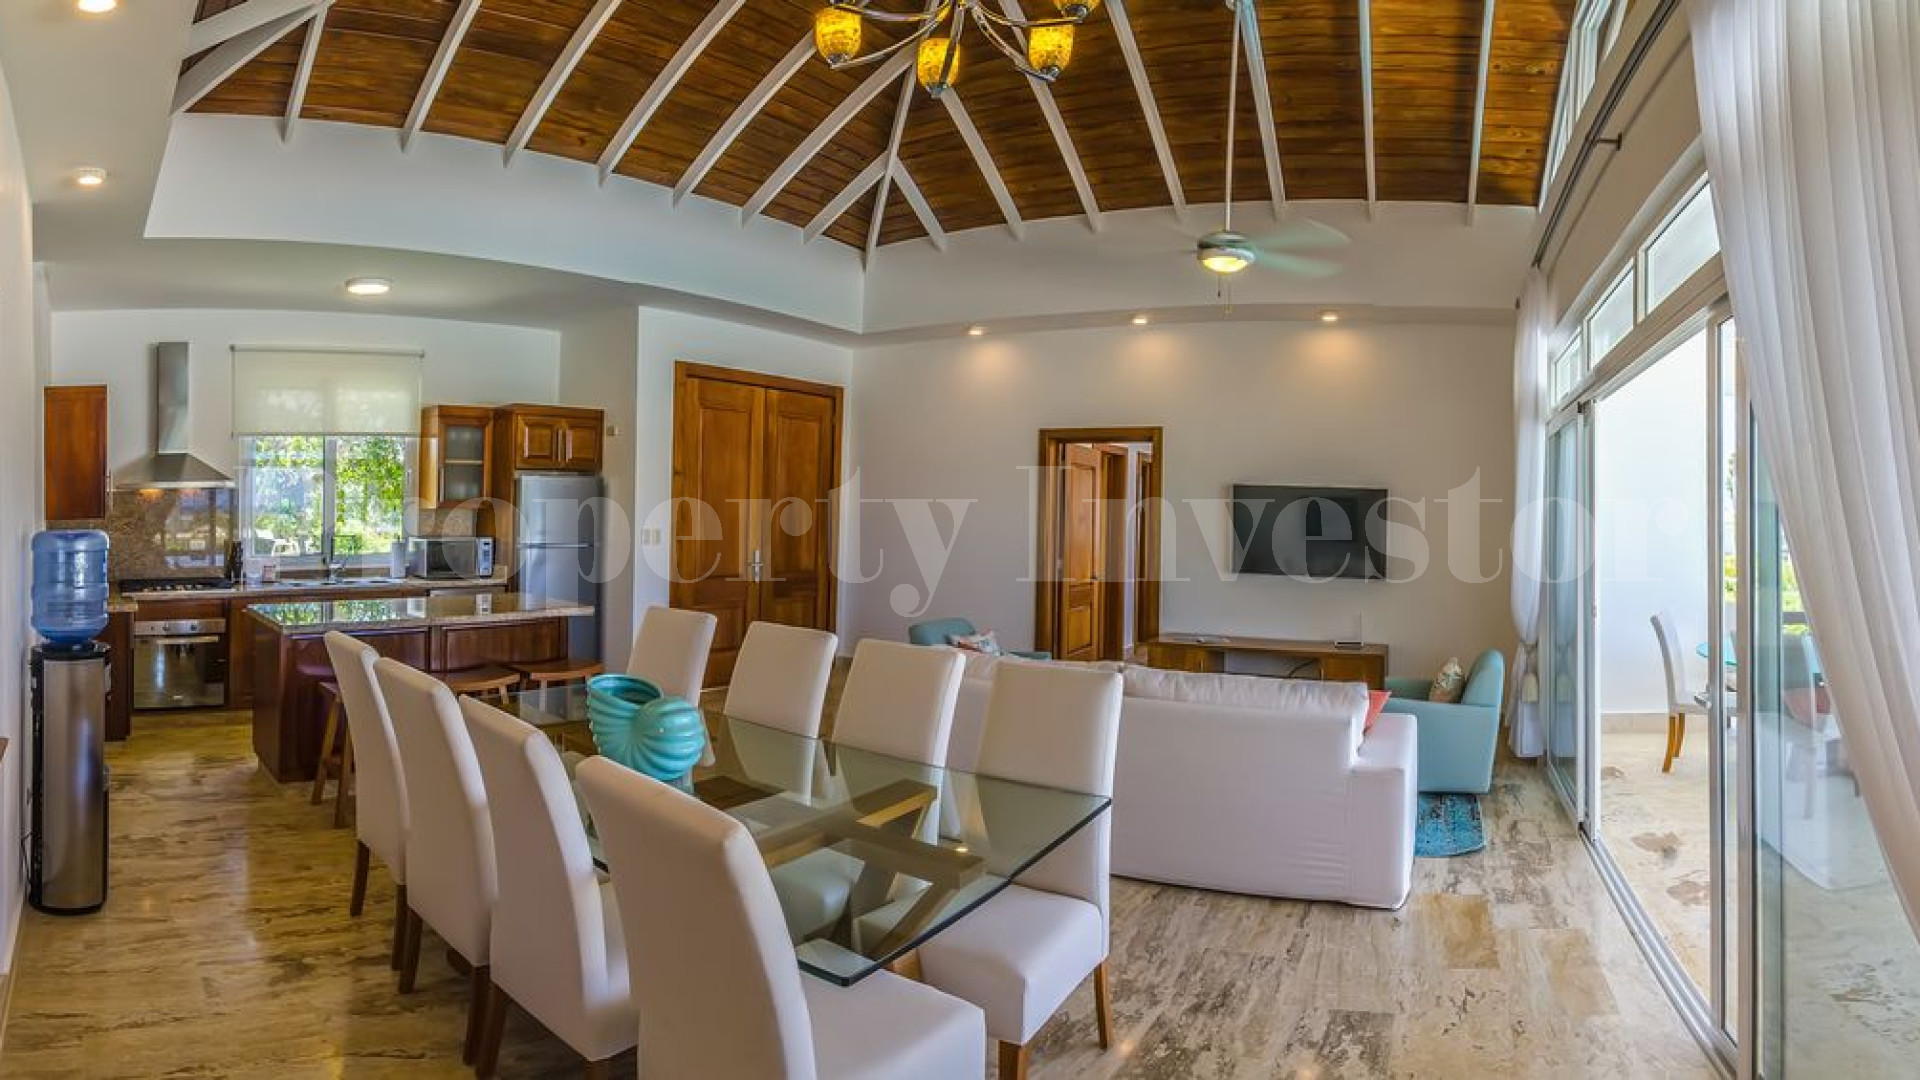 3 Bedroom Oceanview Villa in the Dominican Republic with 30 Year Financing (Villa 12)